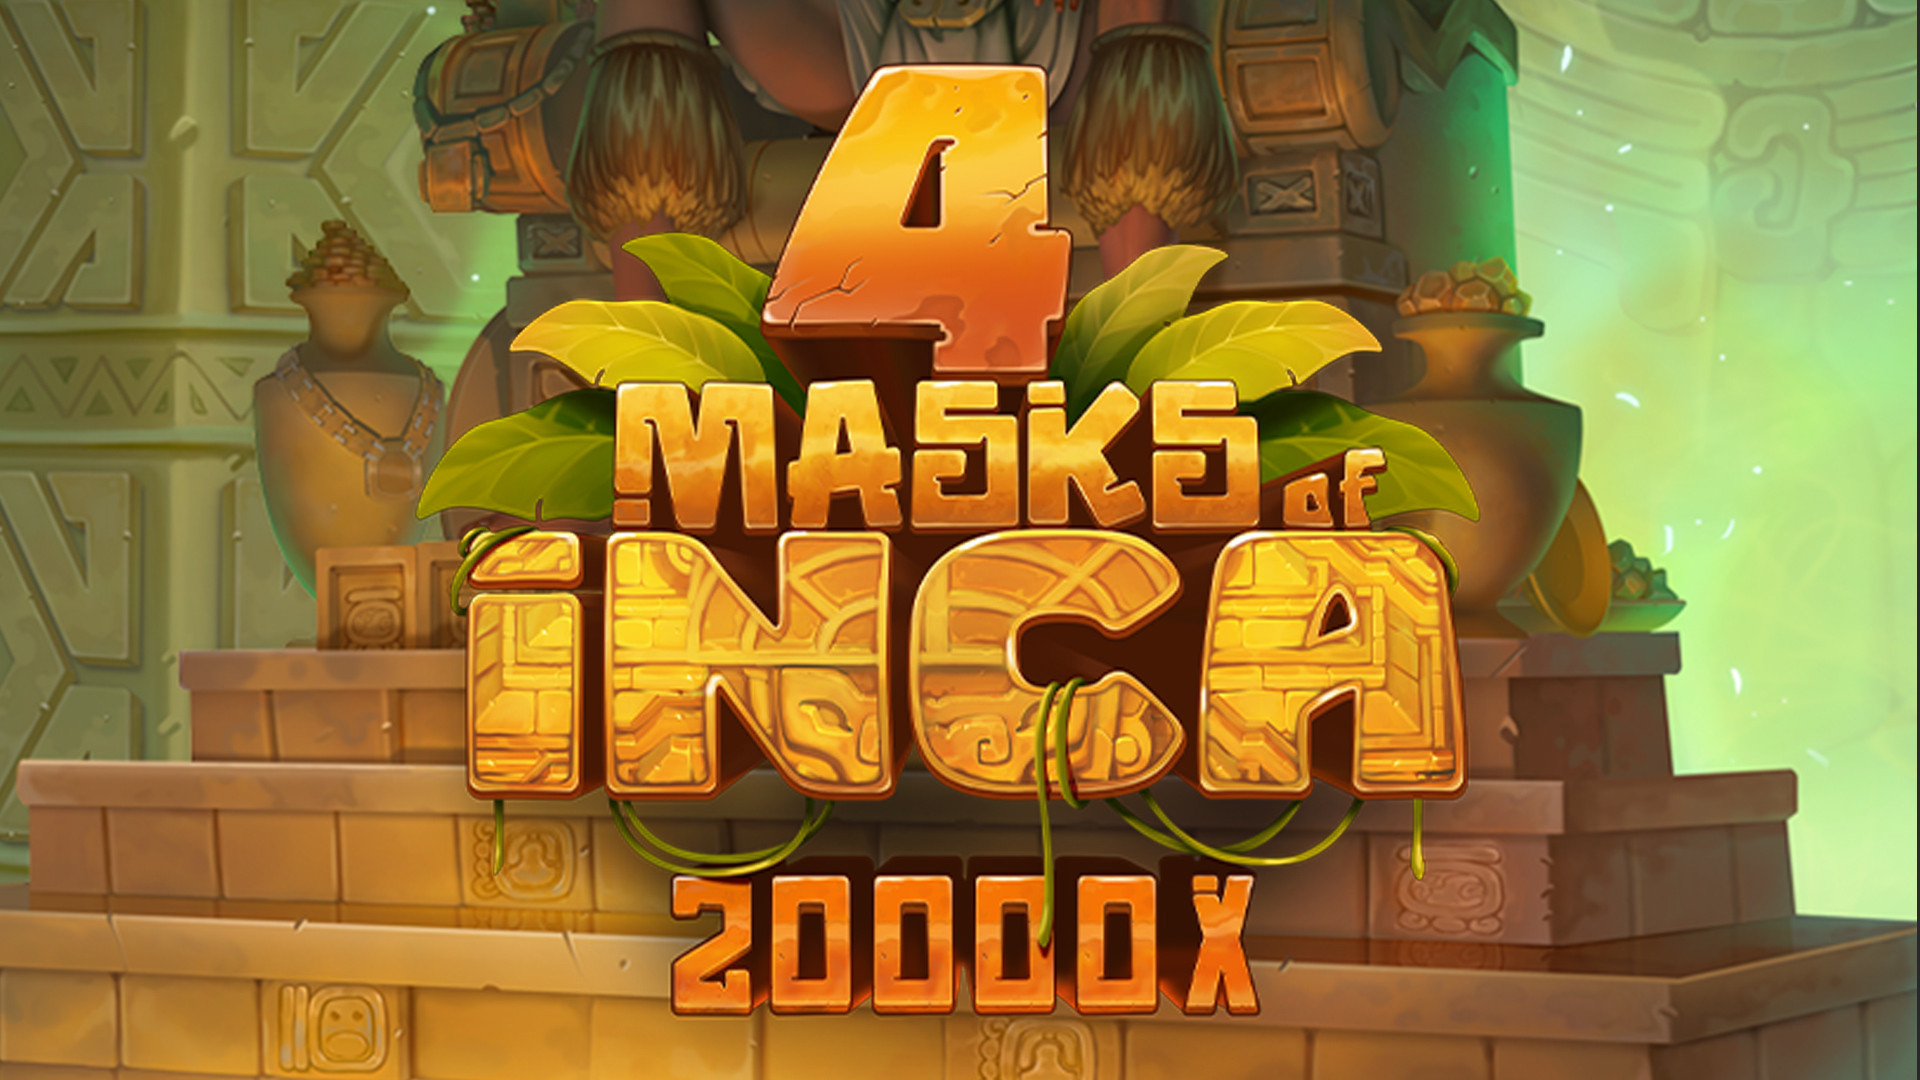 4 Masks of Inca